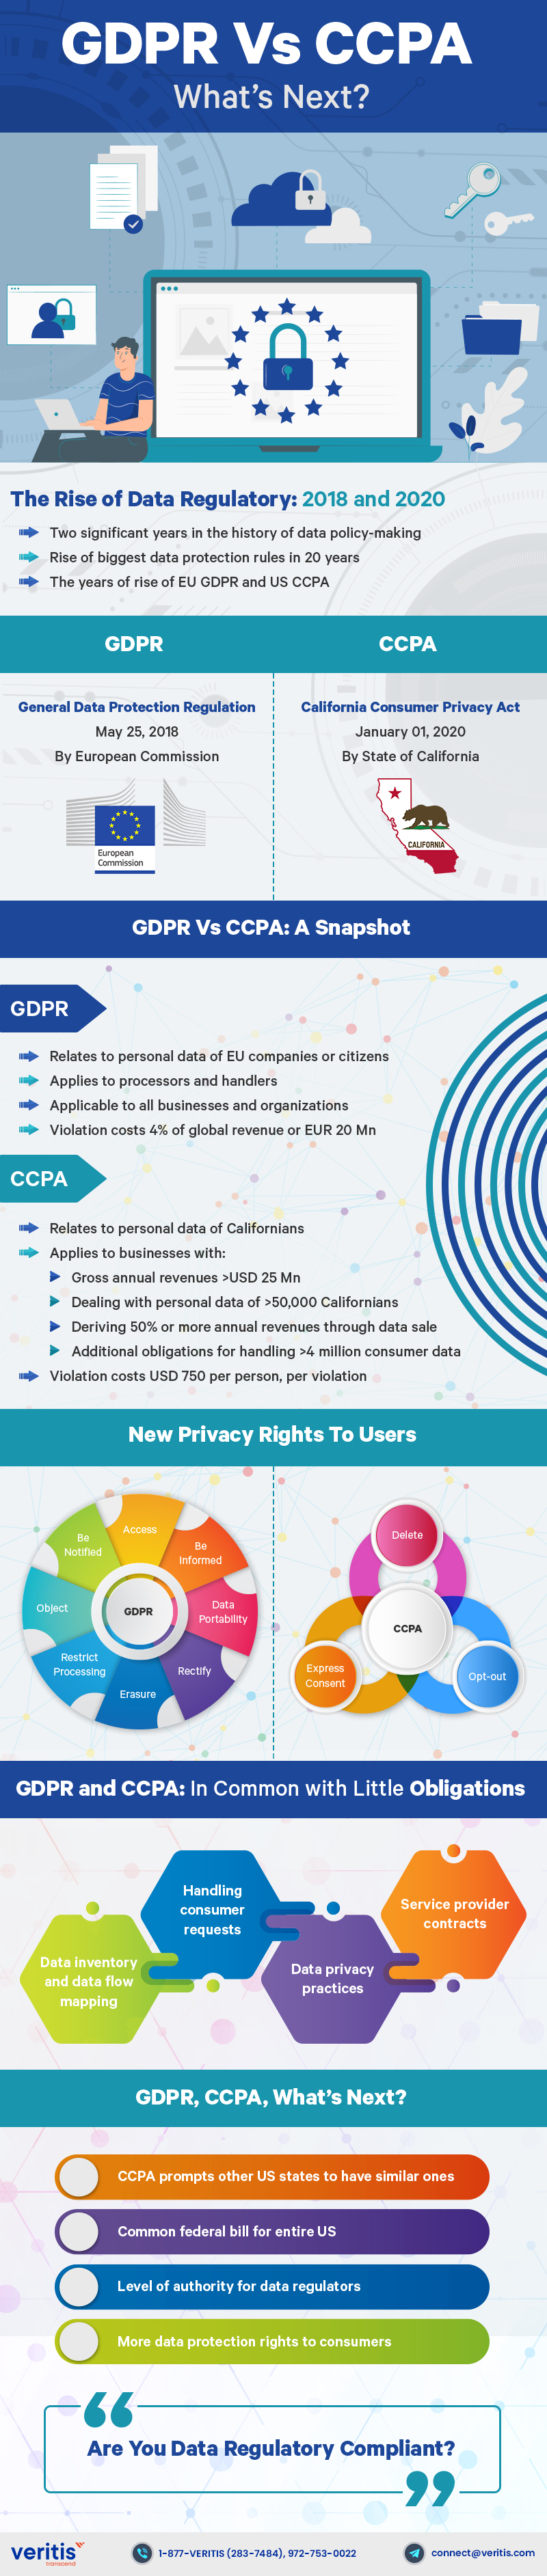 Data Regulatory: GDPR Vs CCPA, What’s Next? IT Infographic